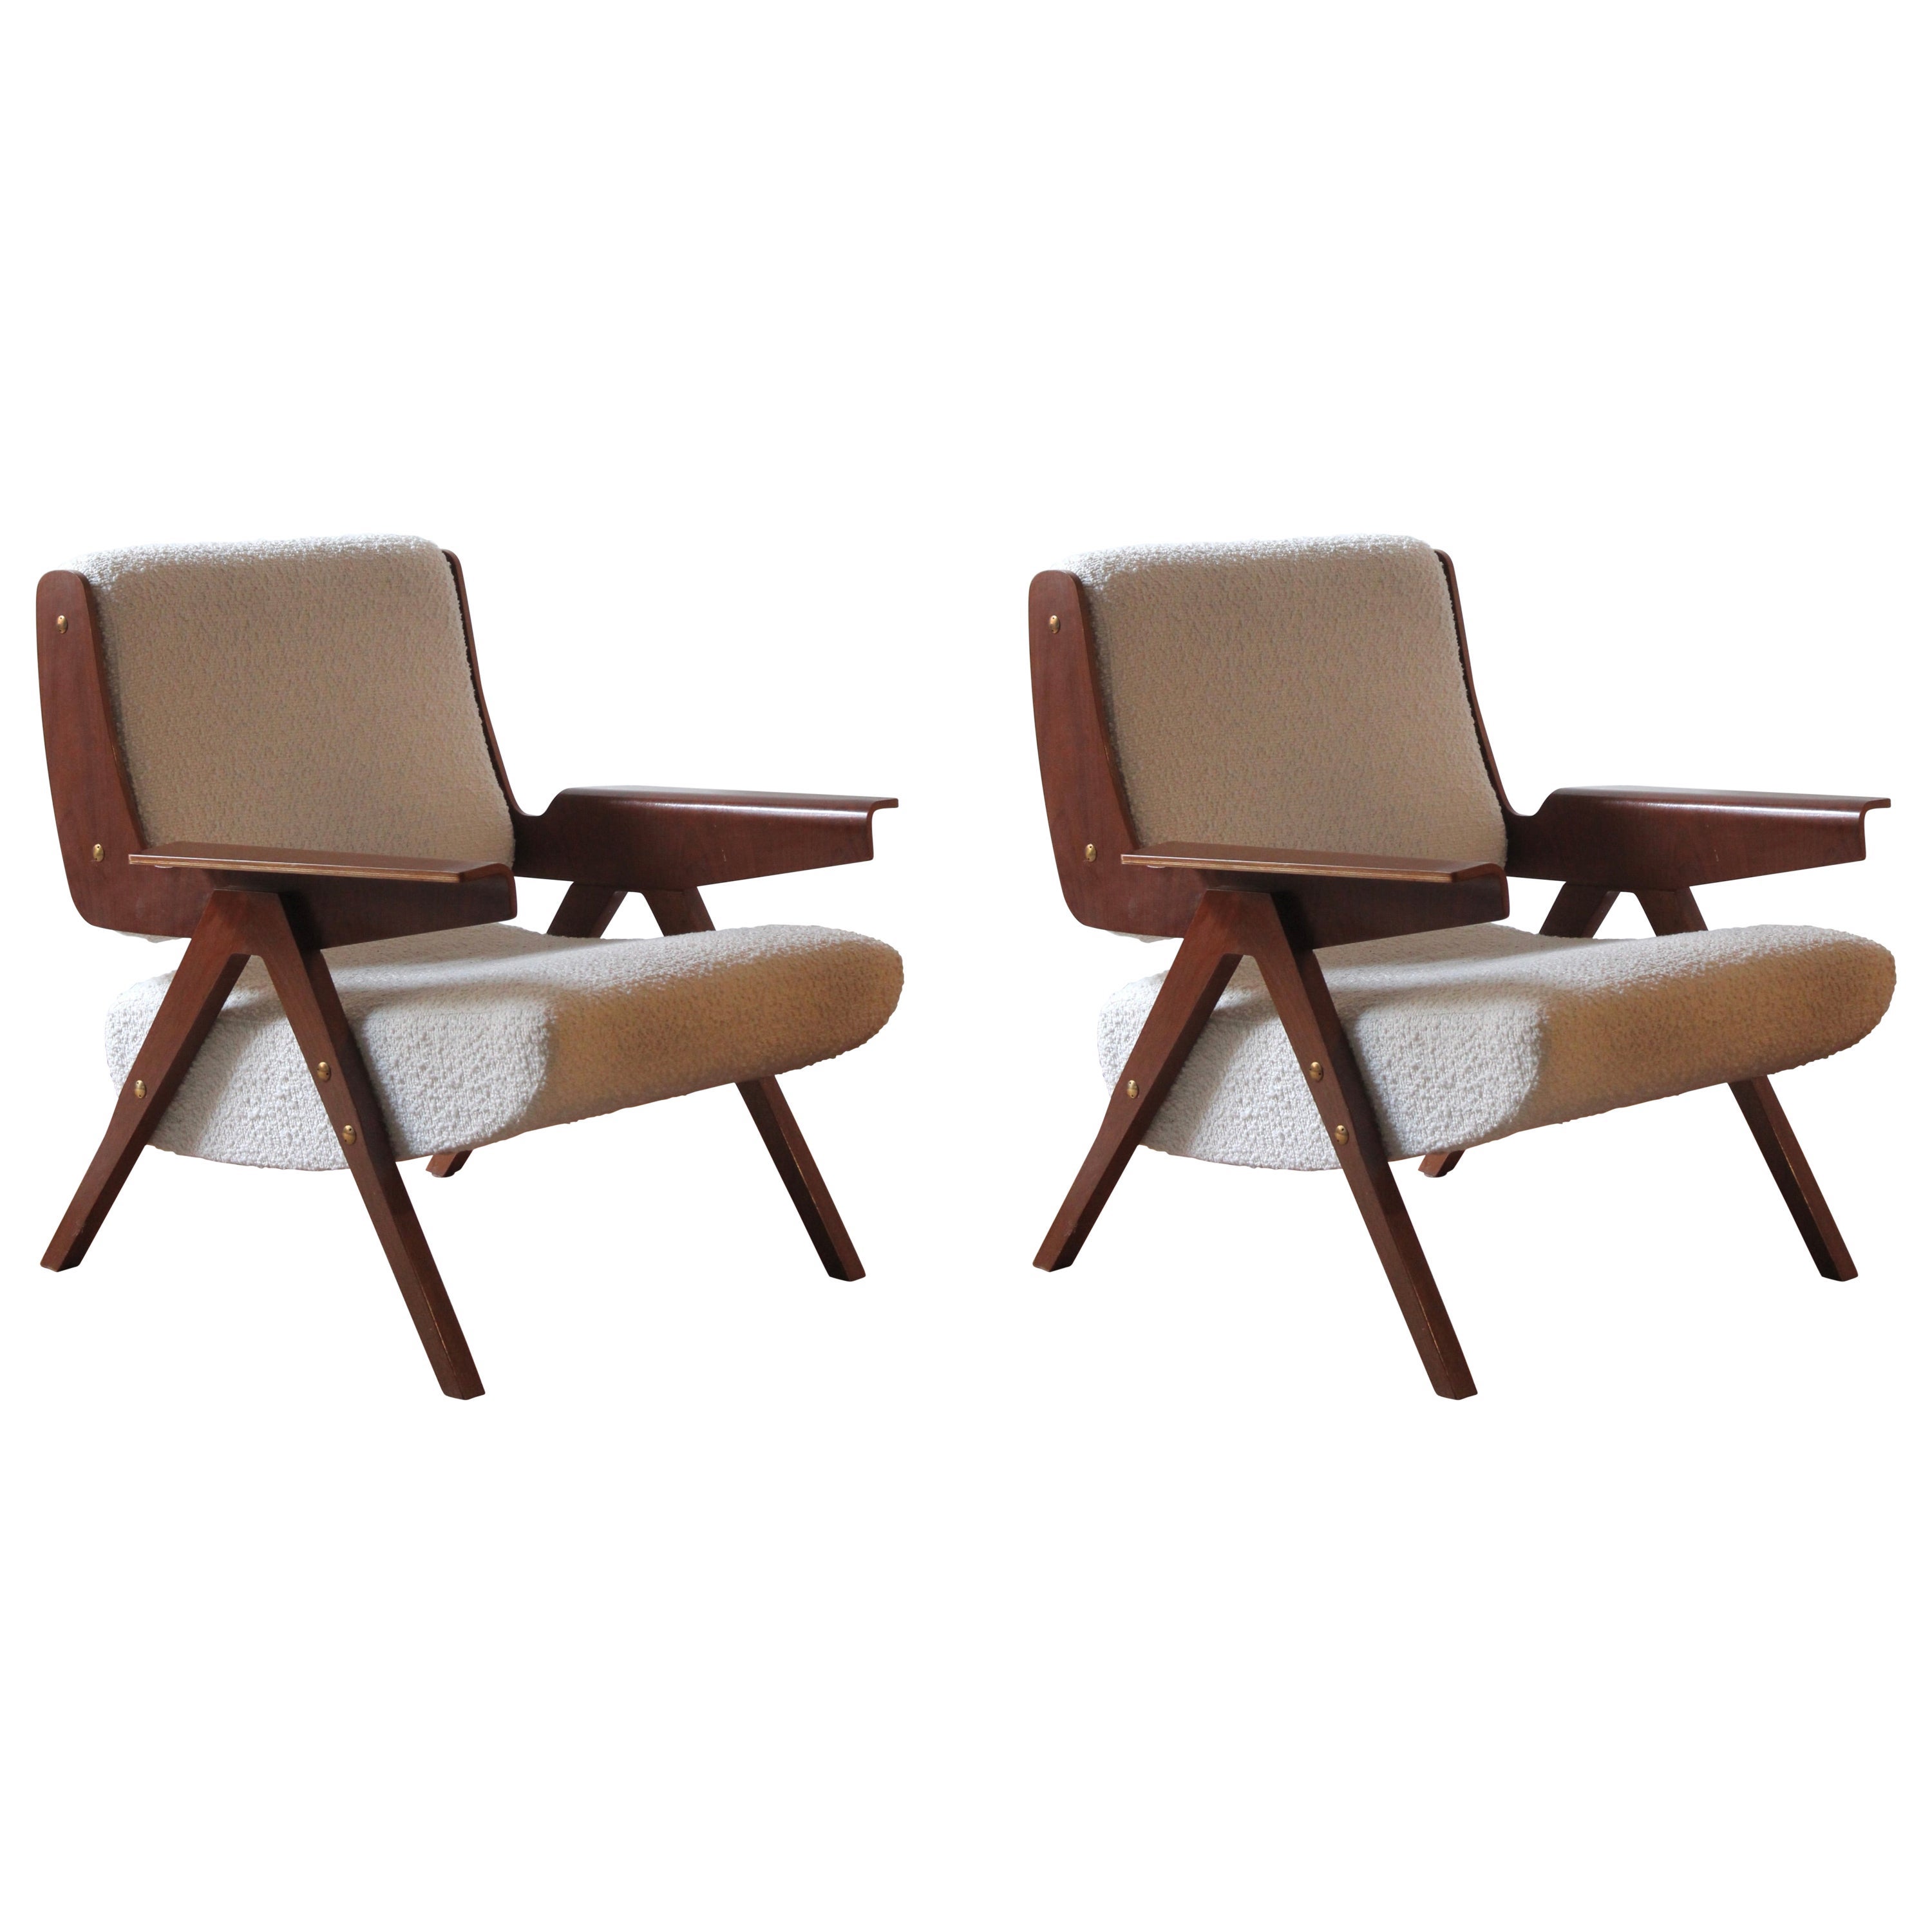 Gianfranco Frattini, Lounge Chairs Plywood, White Fabric, Cassina Italy, C. 1955